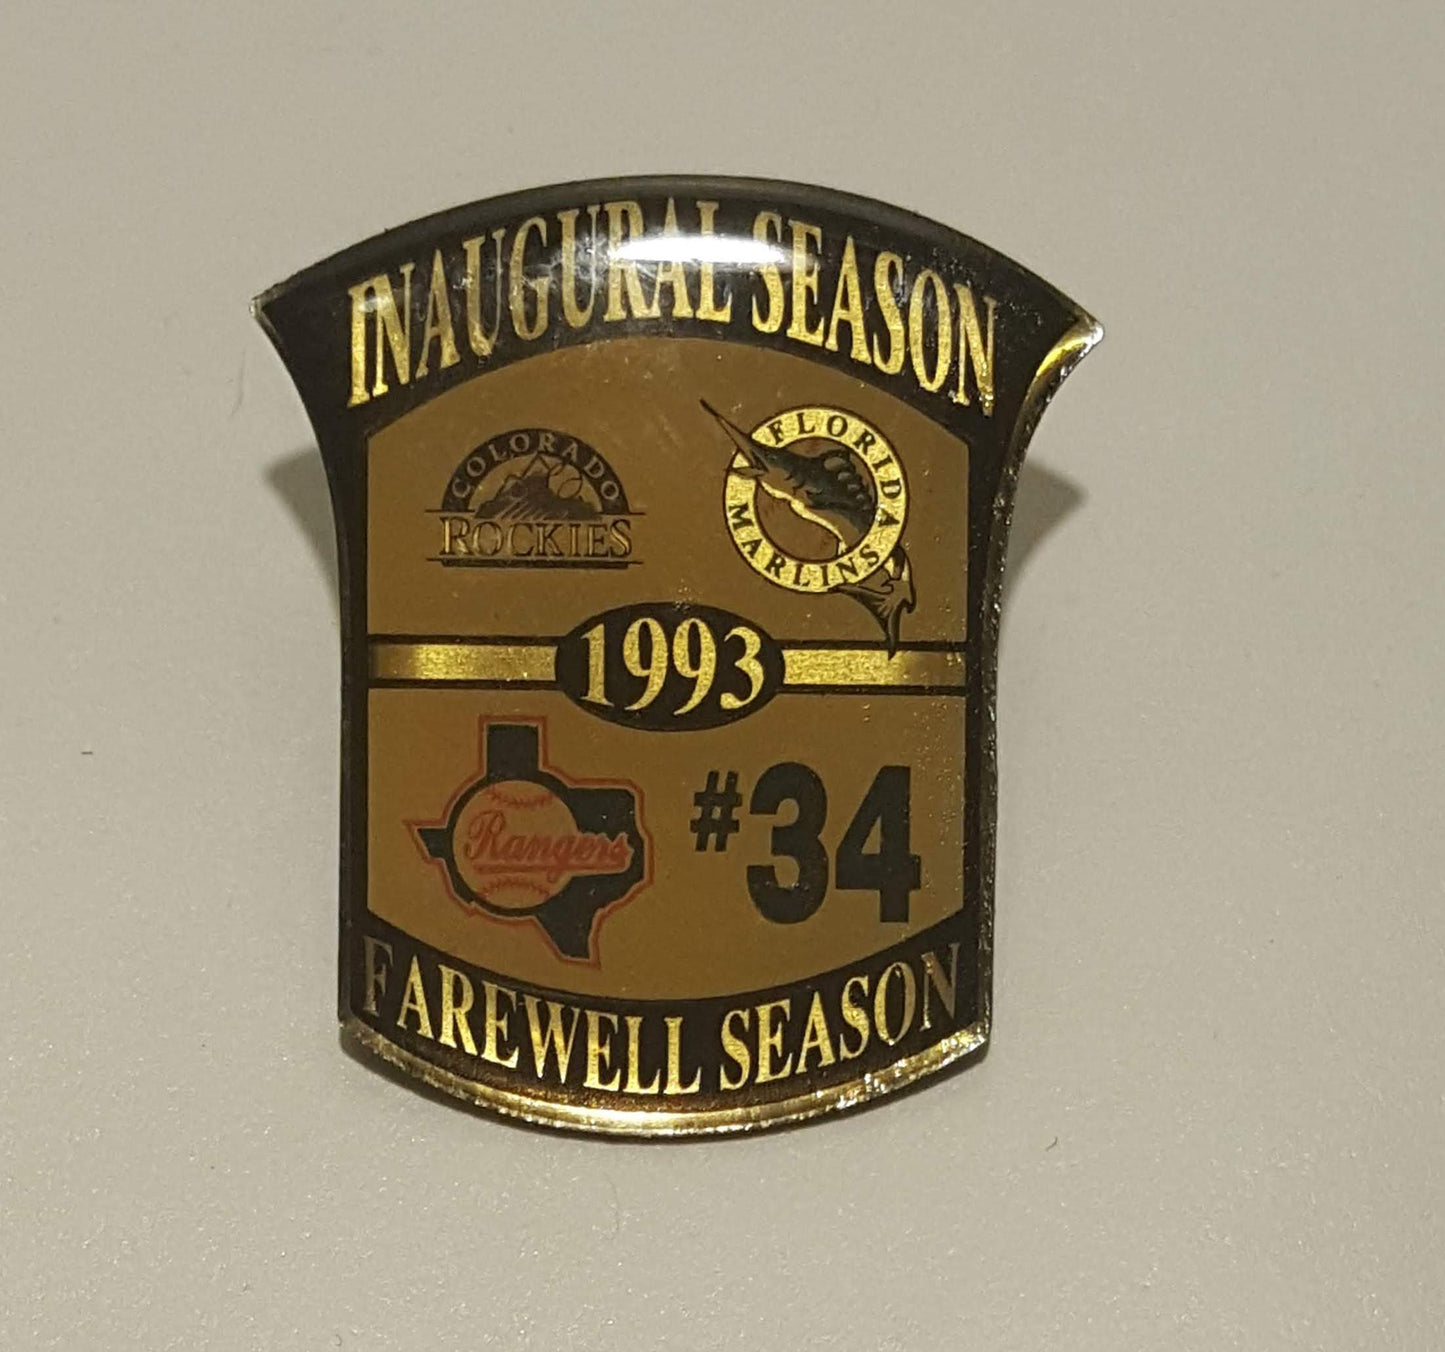 1993 Inaugural Season Lapel Pin Farewell Season